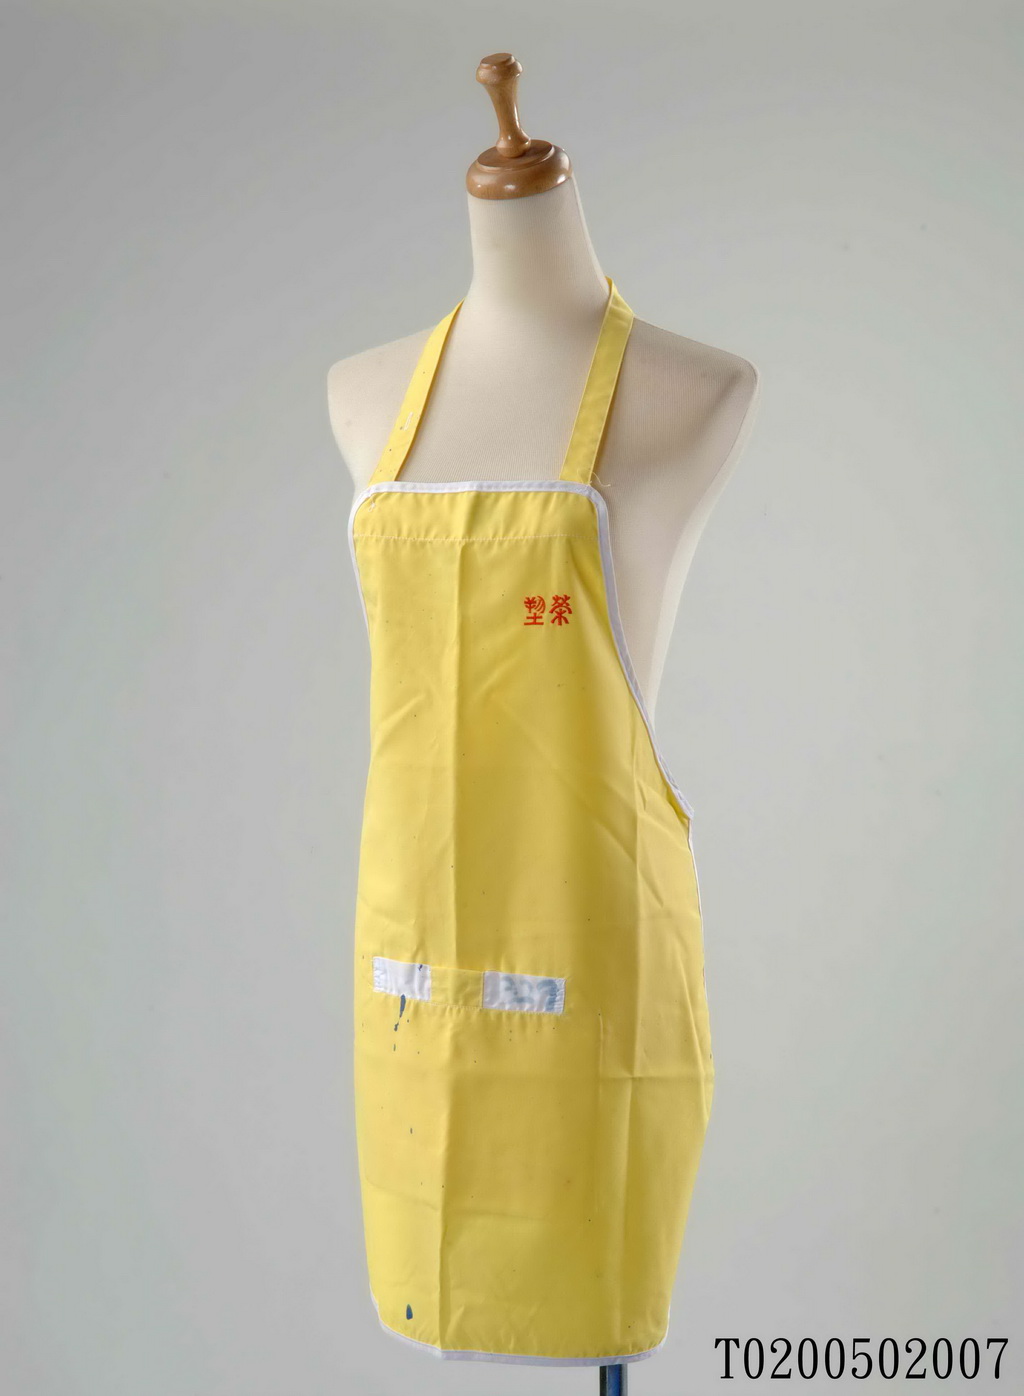 The female uniform of Rongsu (apron-yellow)